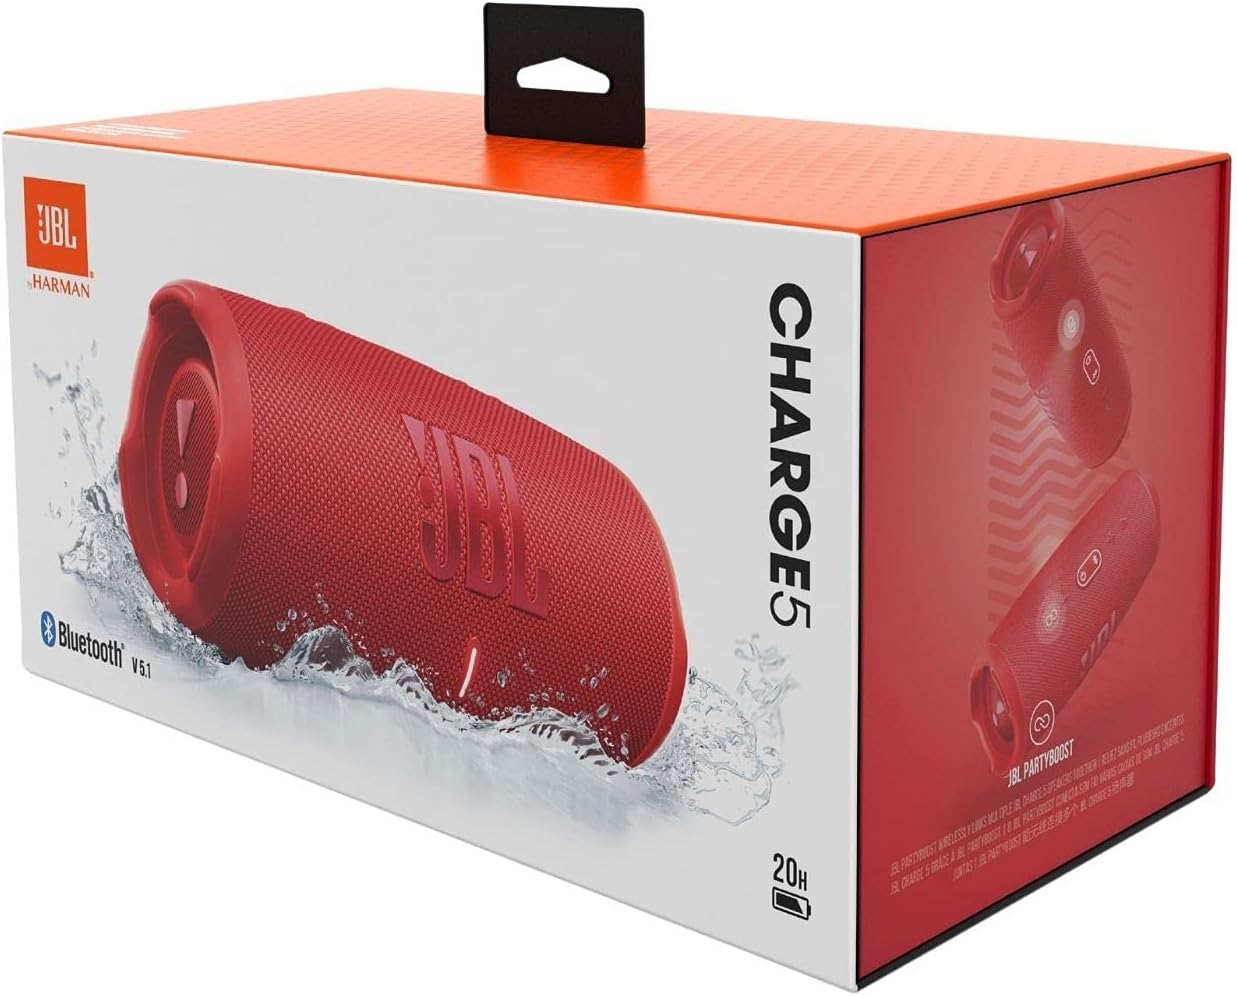 CHARGE 5 Altavoz Bluetooth portátil con IP67 impermeable y carga USB, color rojo